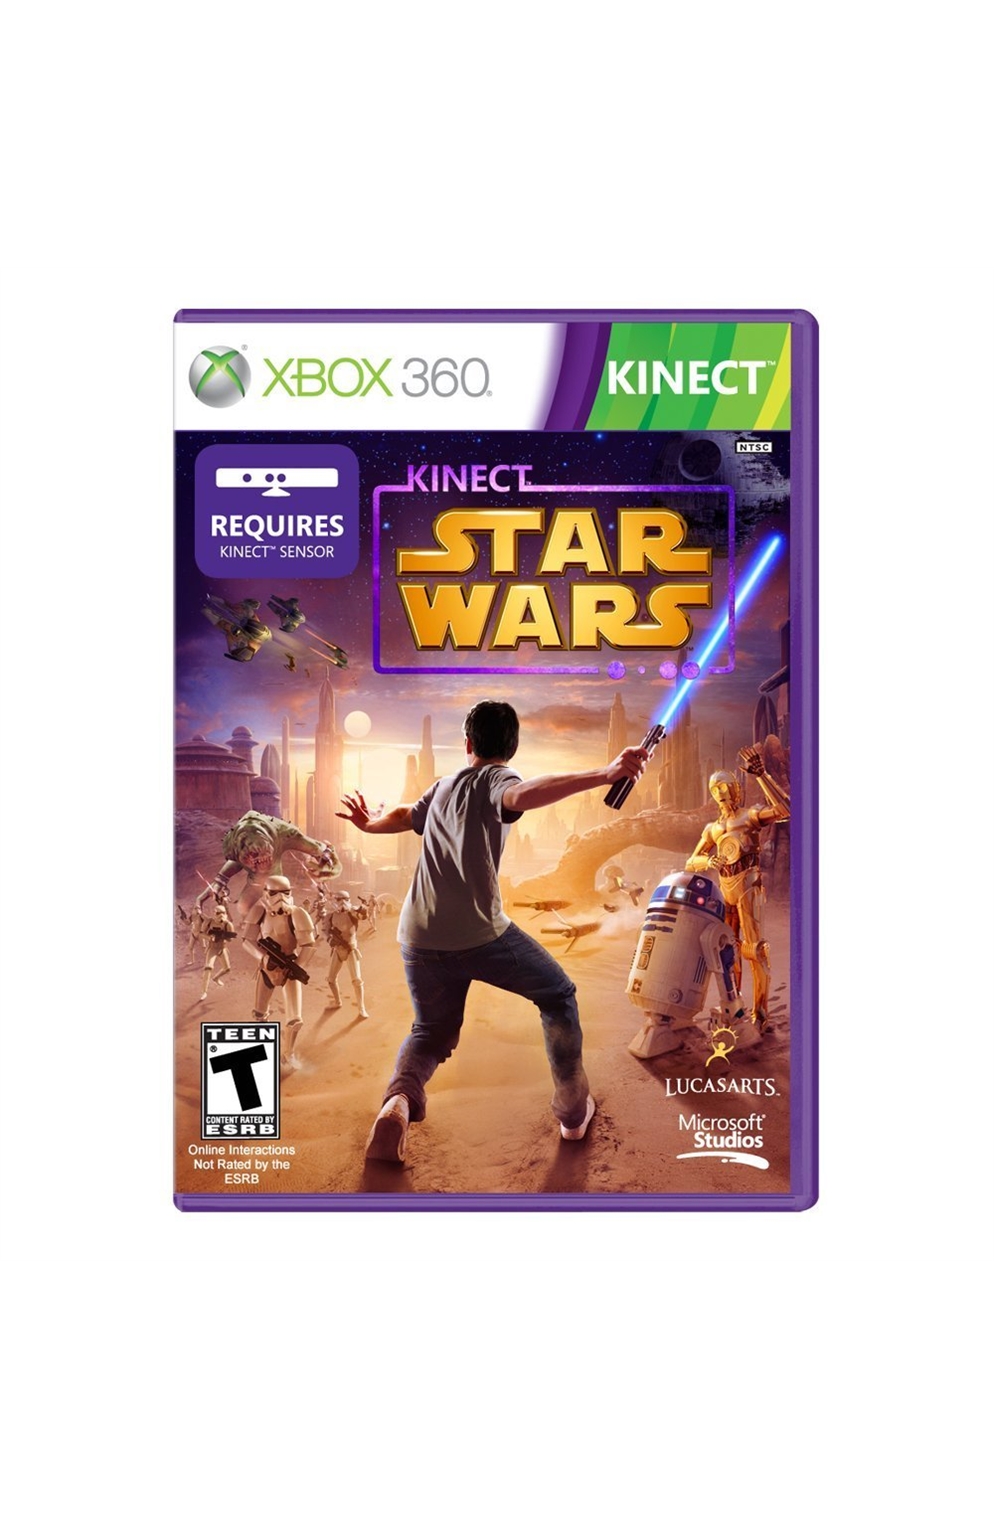 Xbox 360 Xb360 Kinect Star Wars